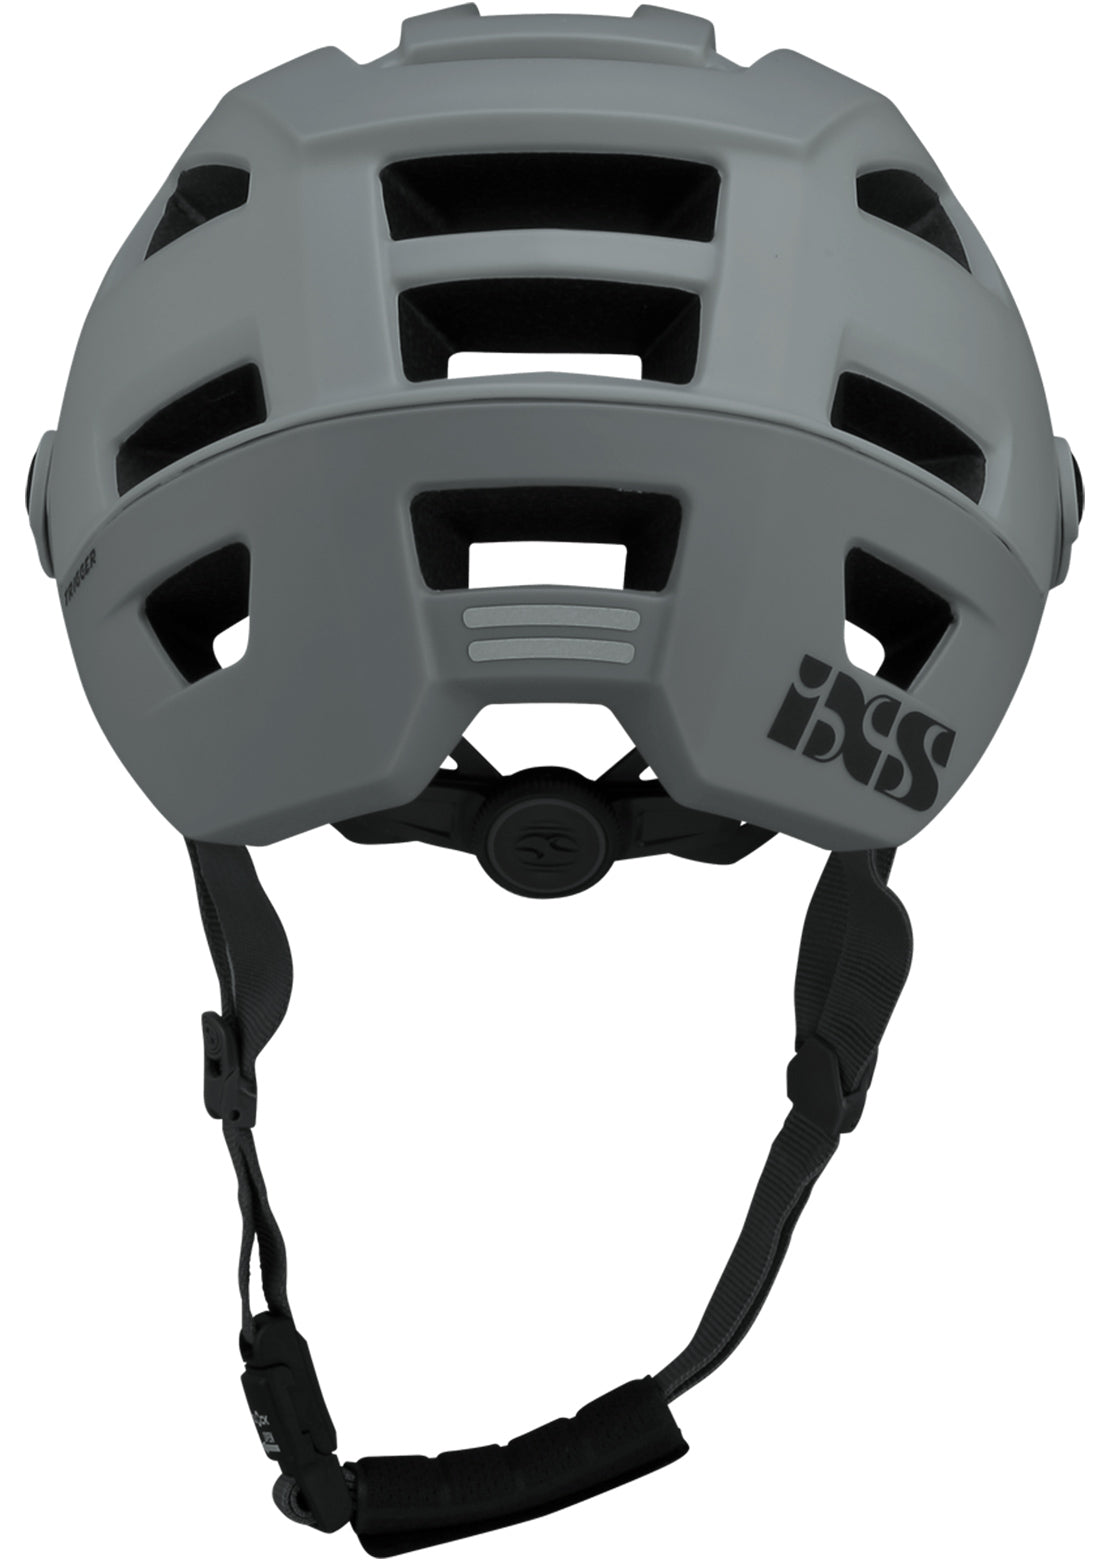 IXS Trigger AM Helmet Light Grey/Grey